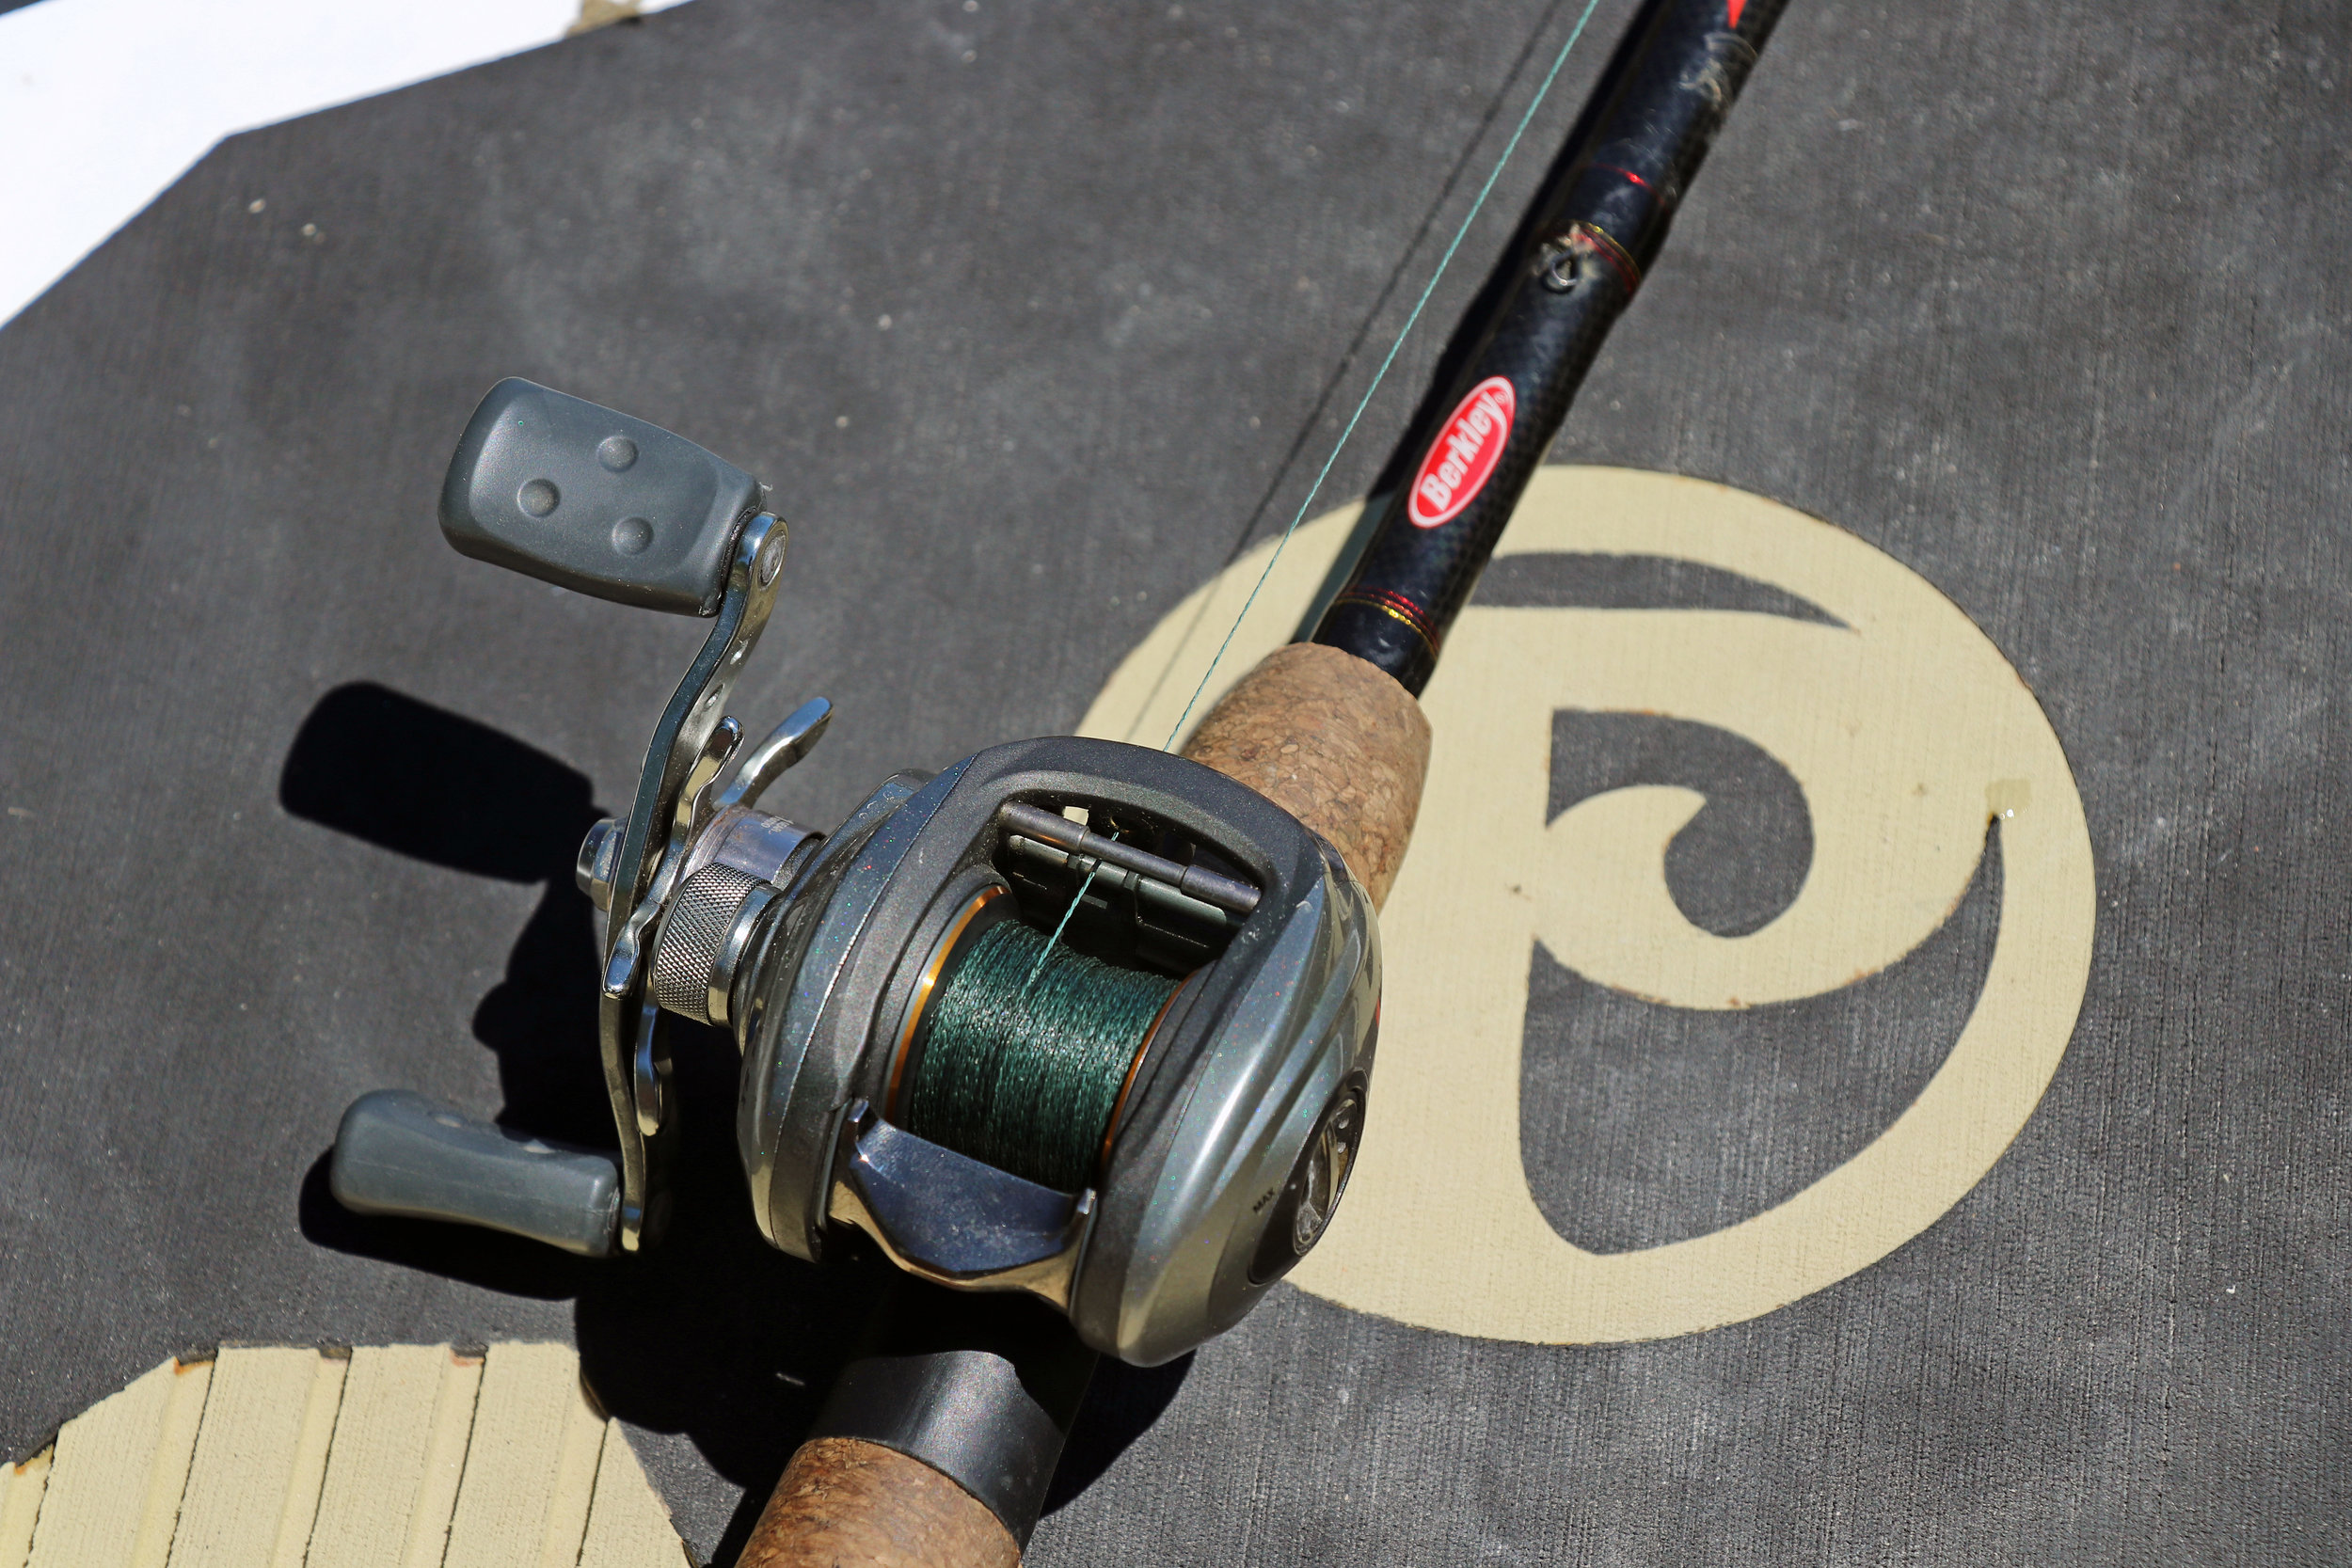  One Bass Fishing Rod, Spinning & Casting Fishing Pole